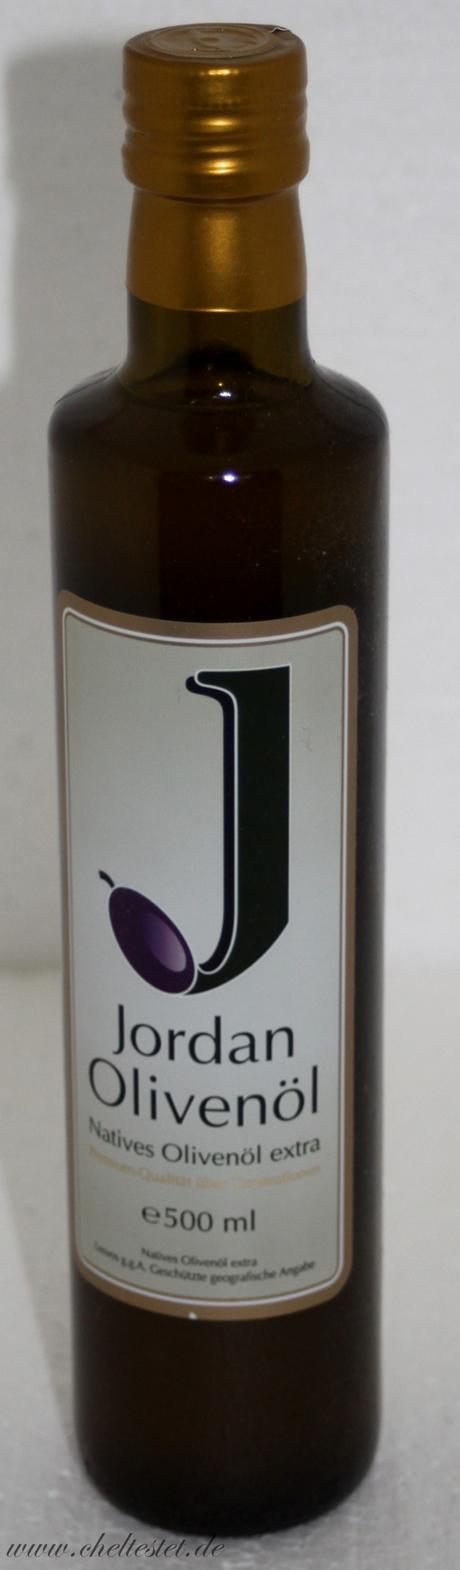 Jordan Olivenöl